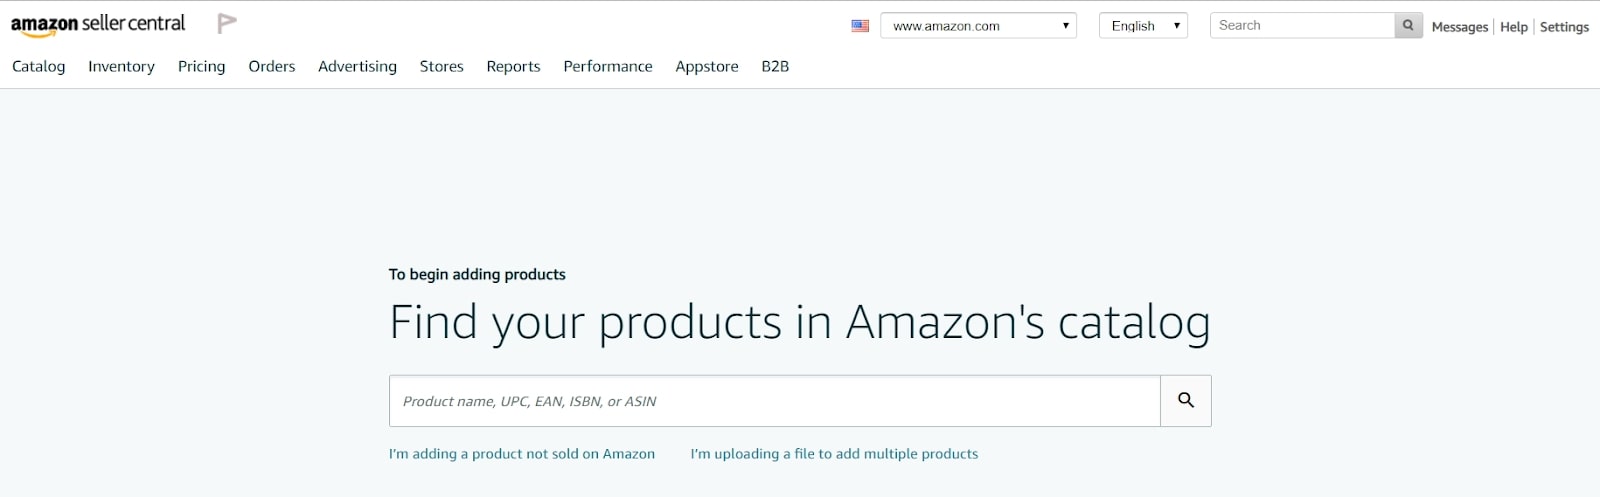 Amazon's inventory management